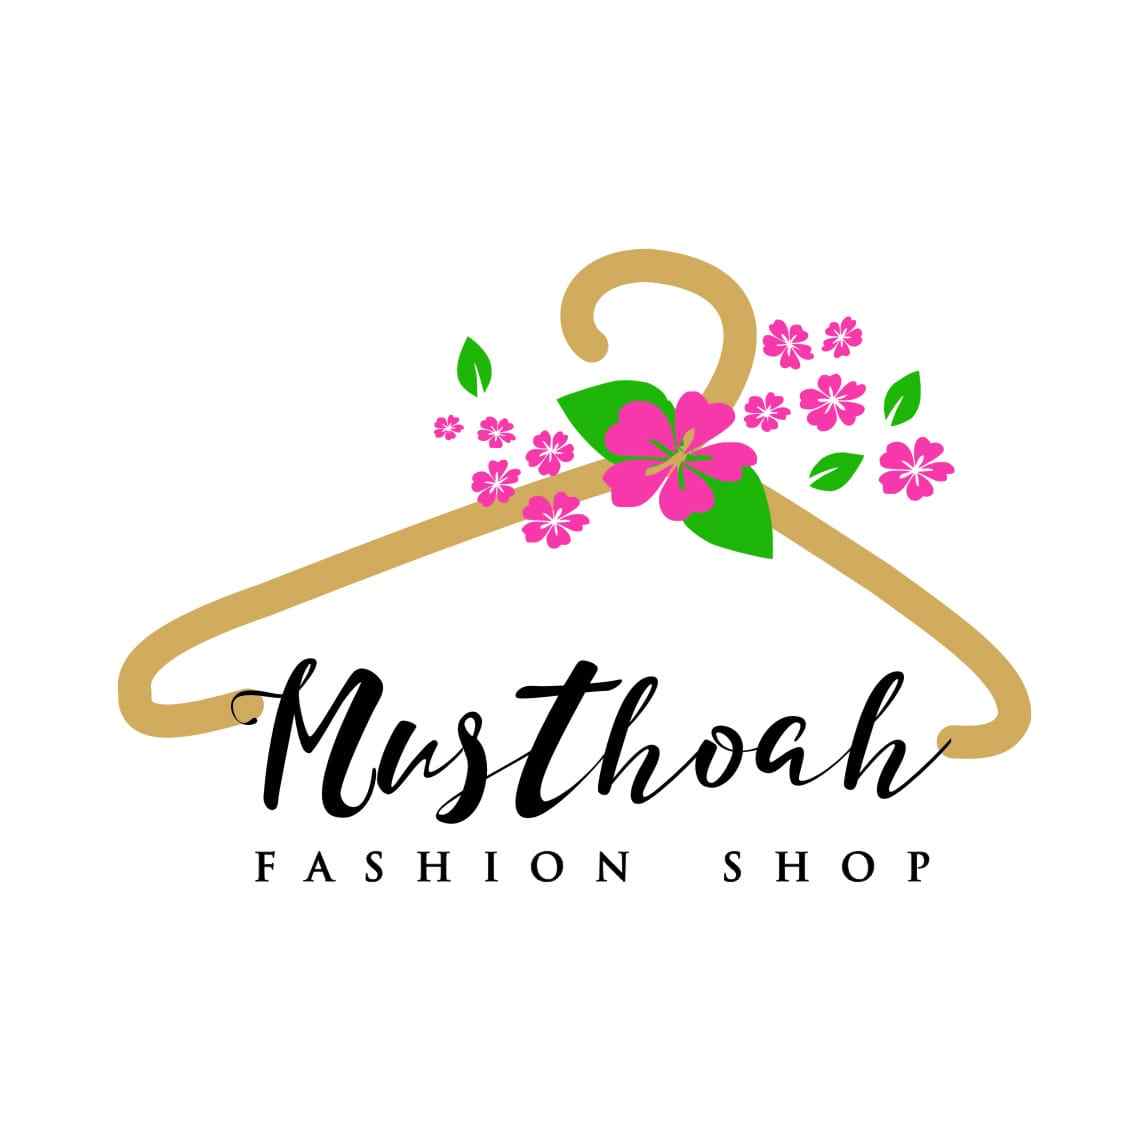 Musthoah Shop